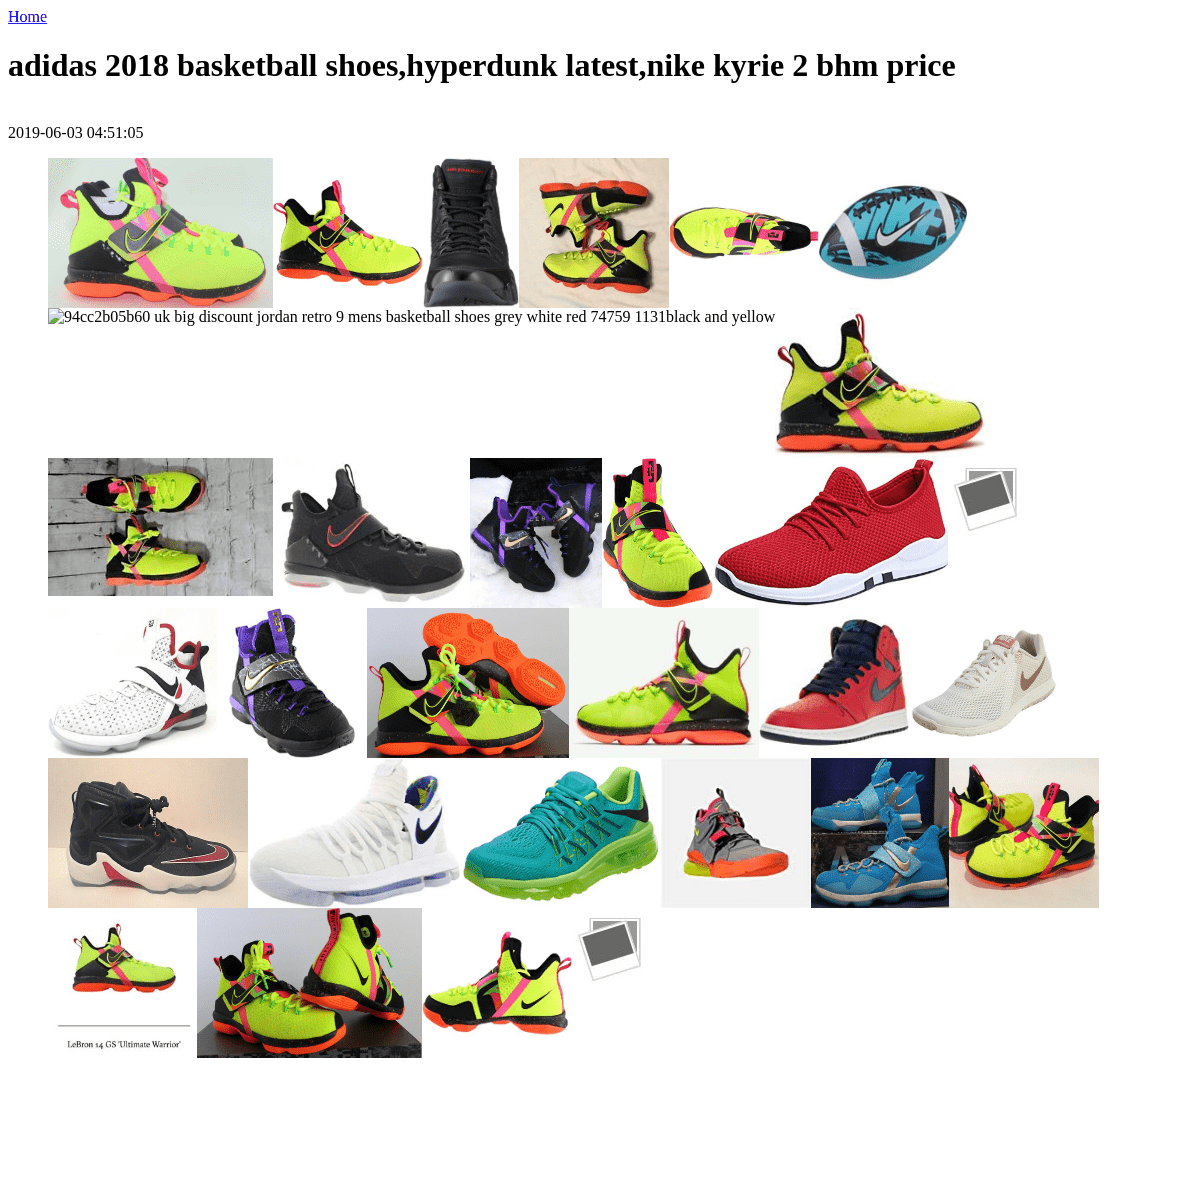 adidas 2018 basketball shoes,hyperdunk latest,nike kyrie 2 bhm price - mscrib.com